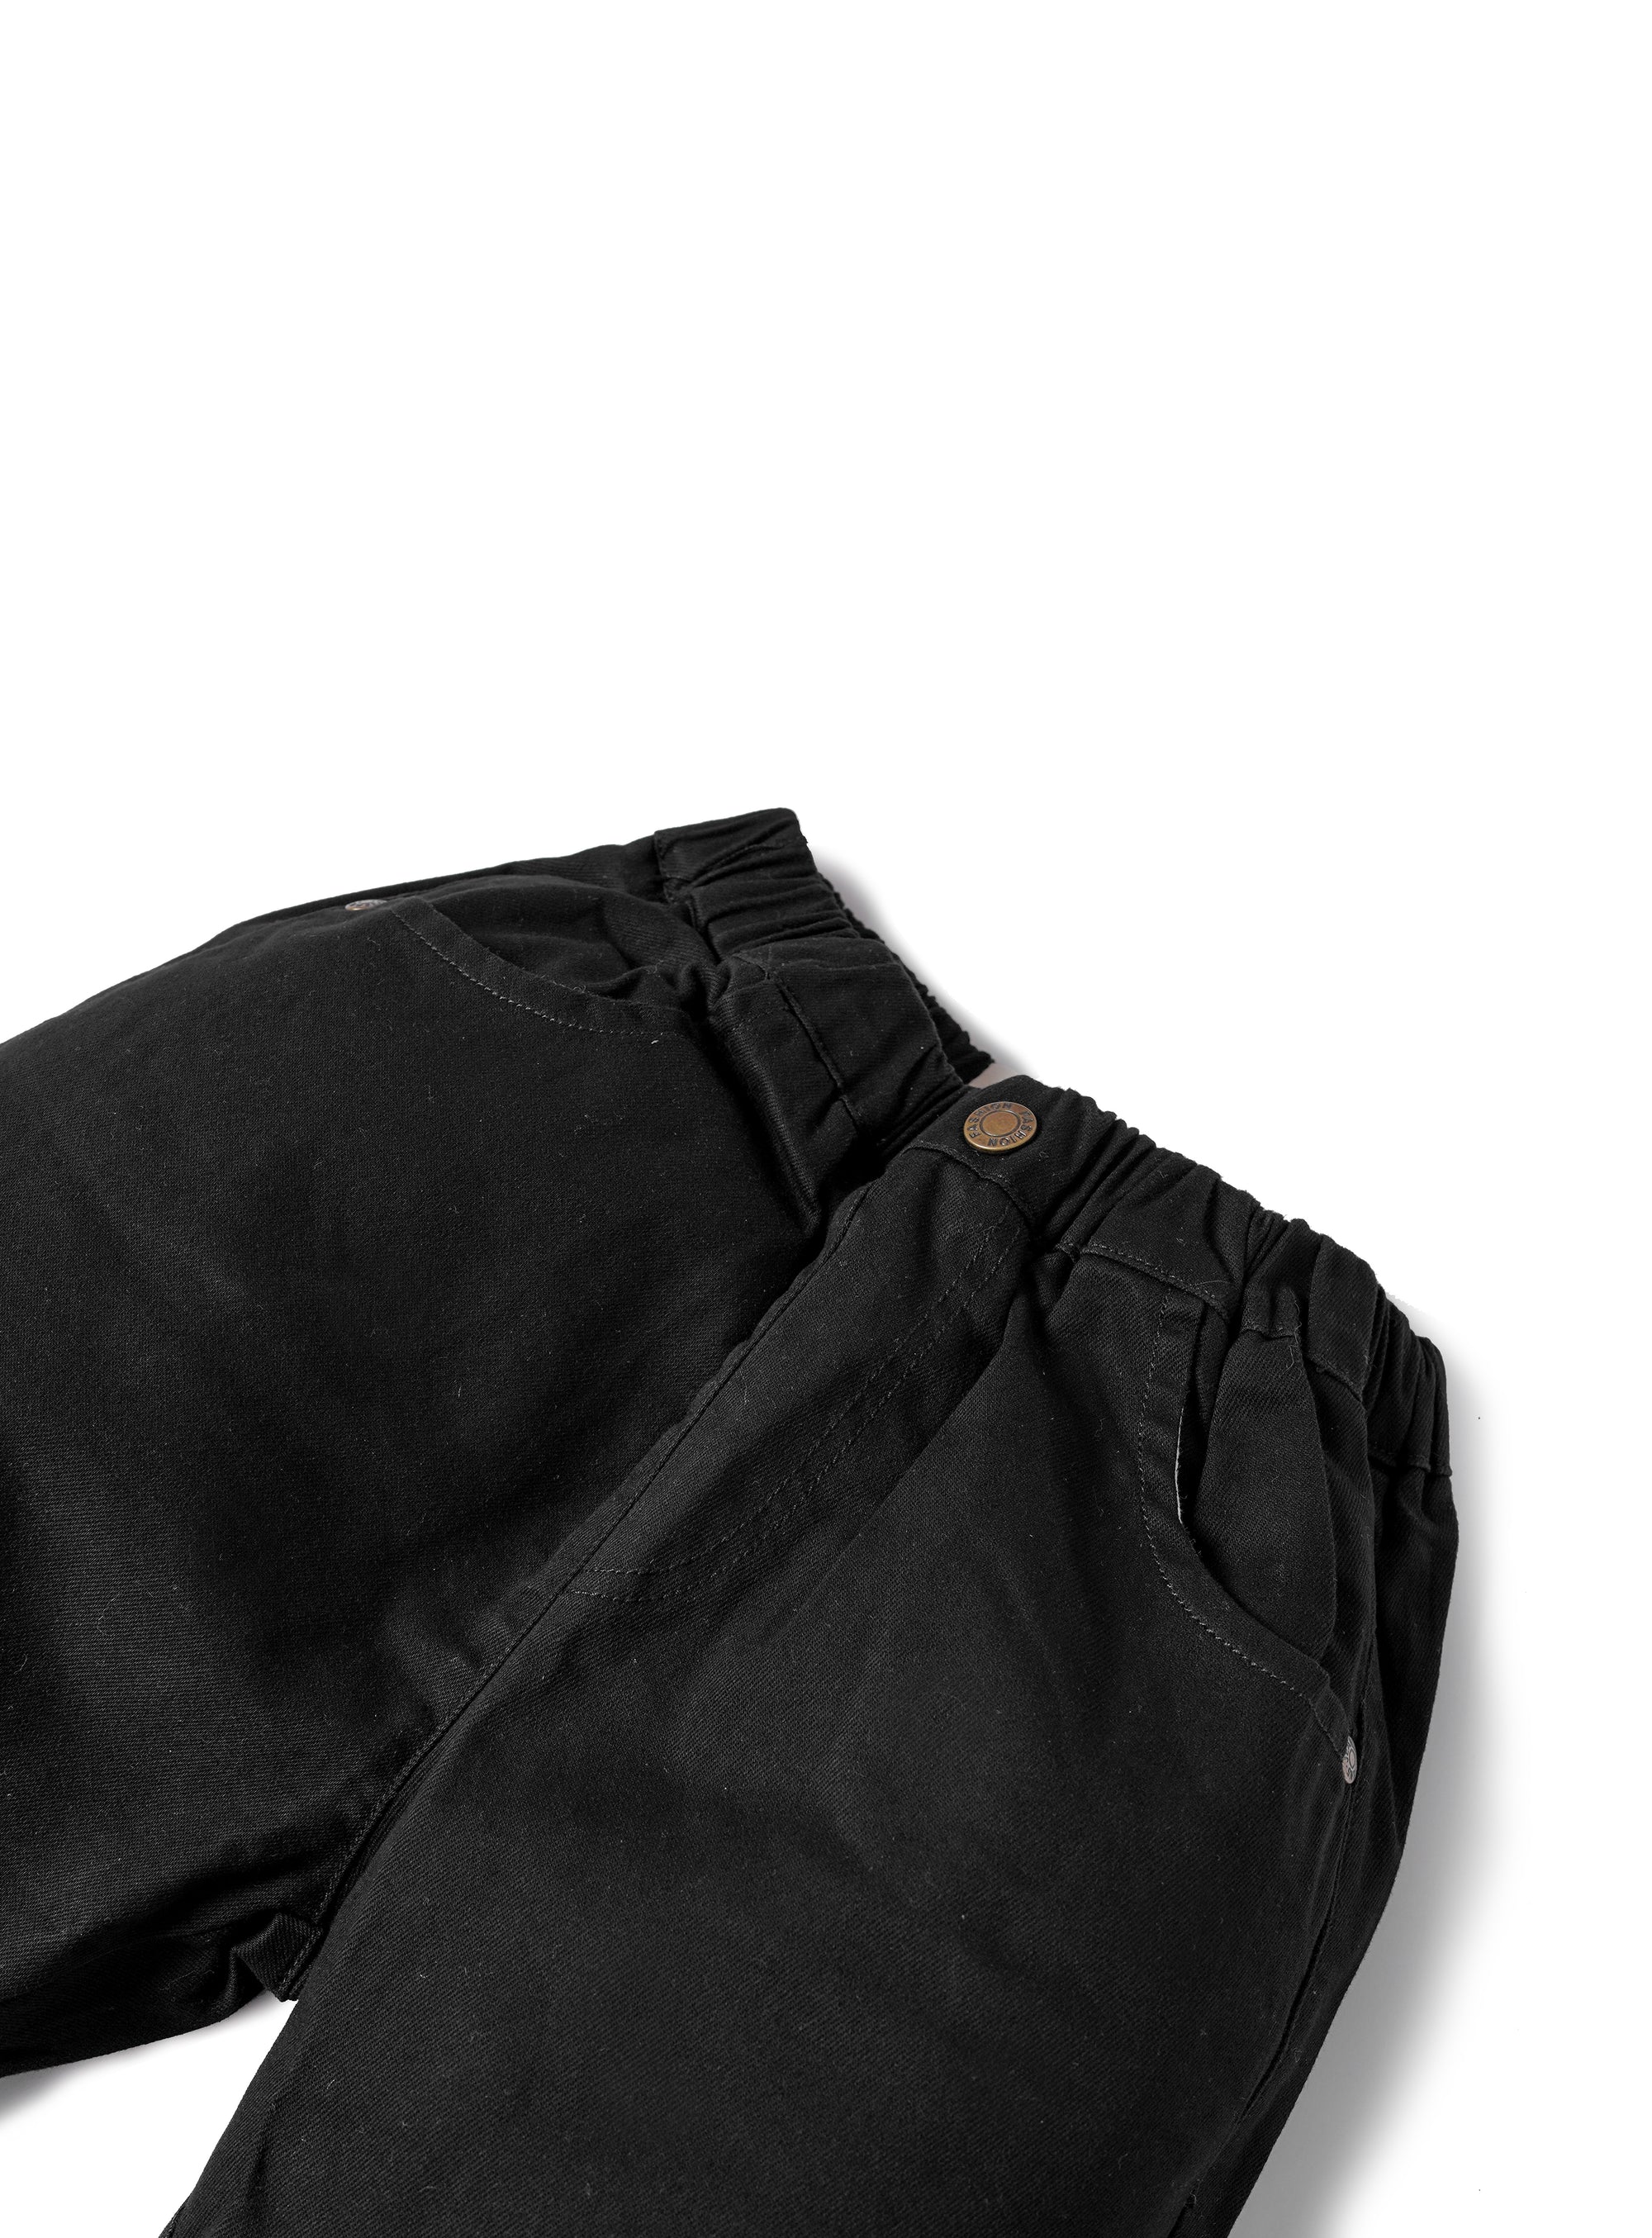 charcoal black comfy pants with stretchable waist